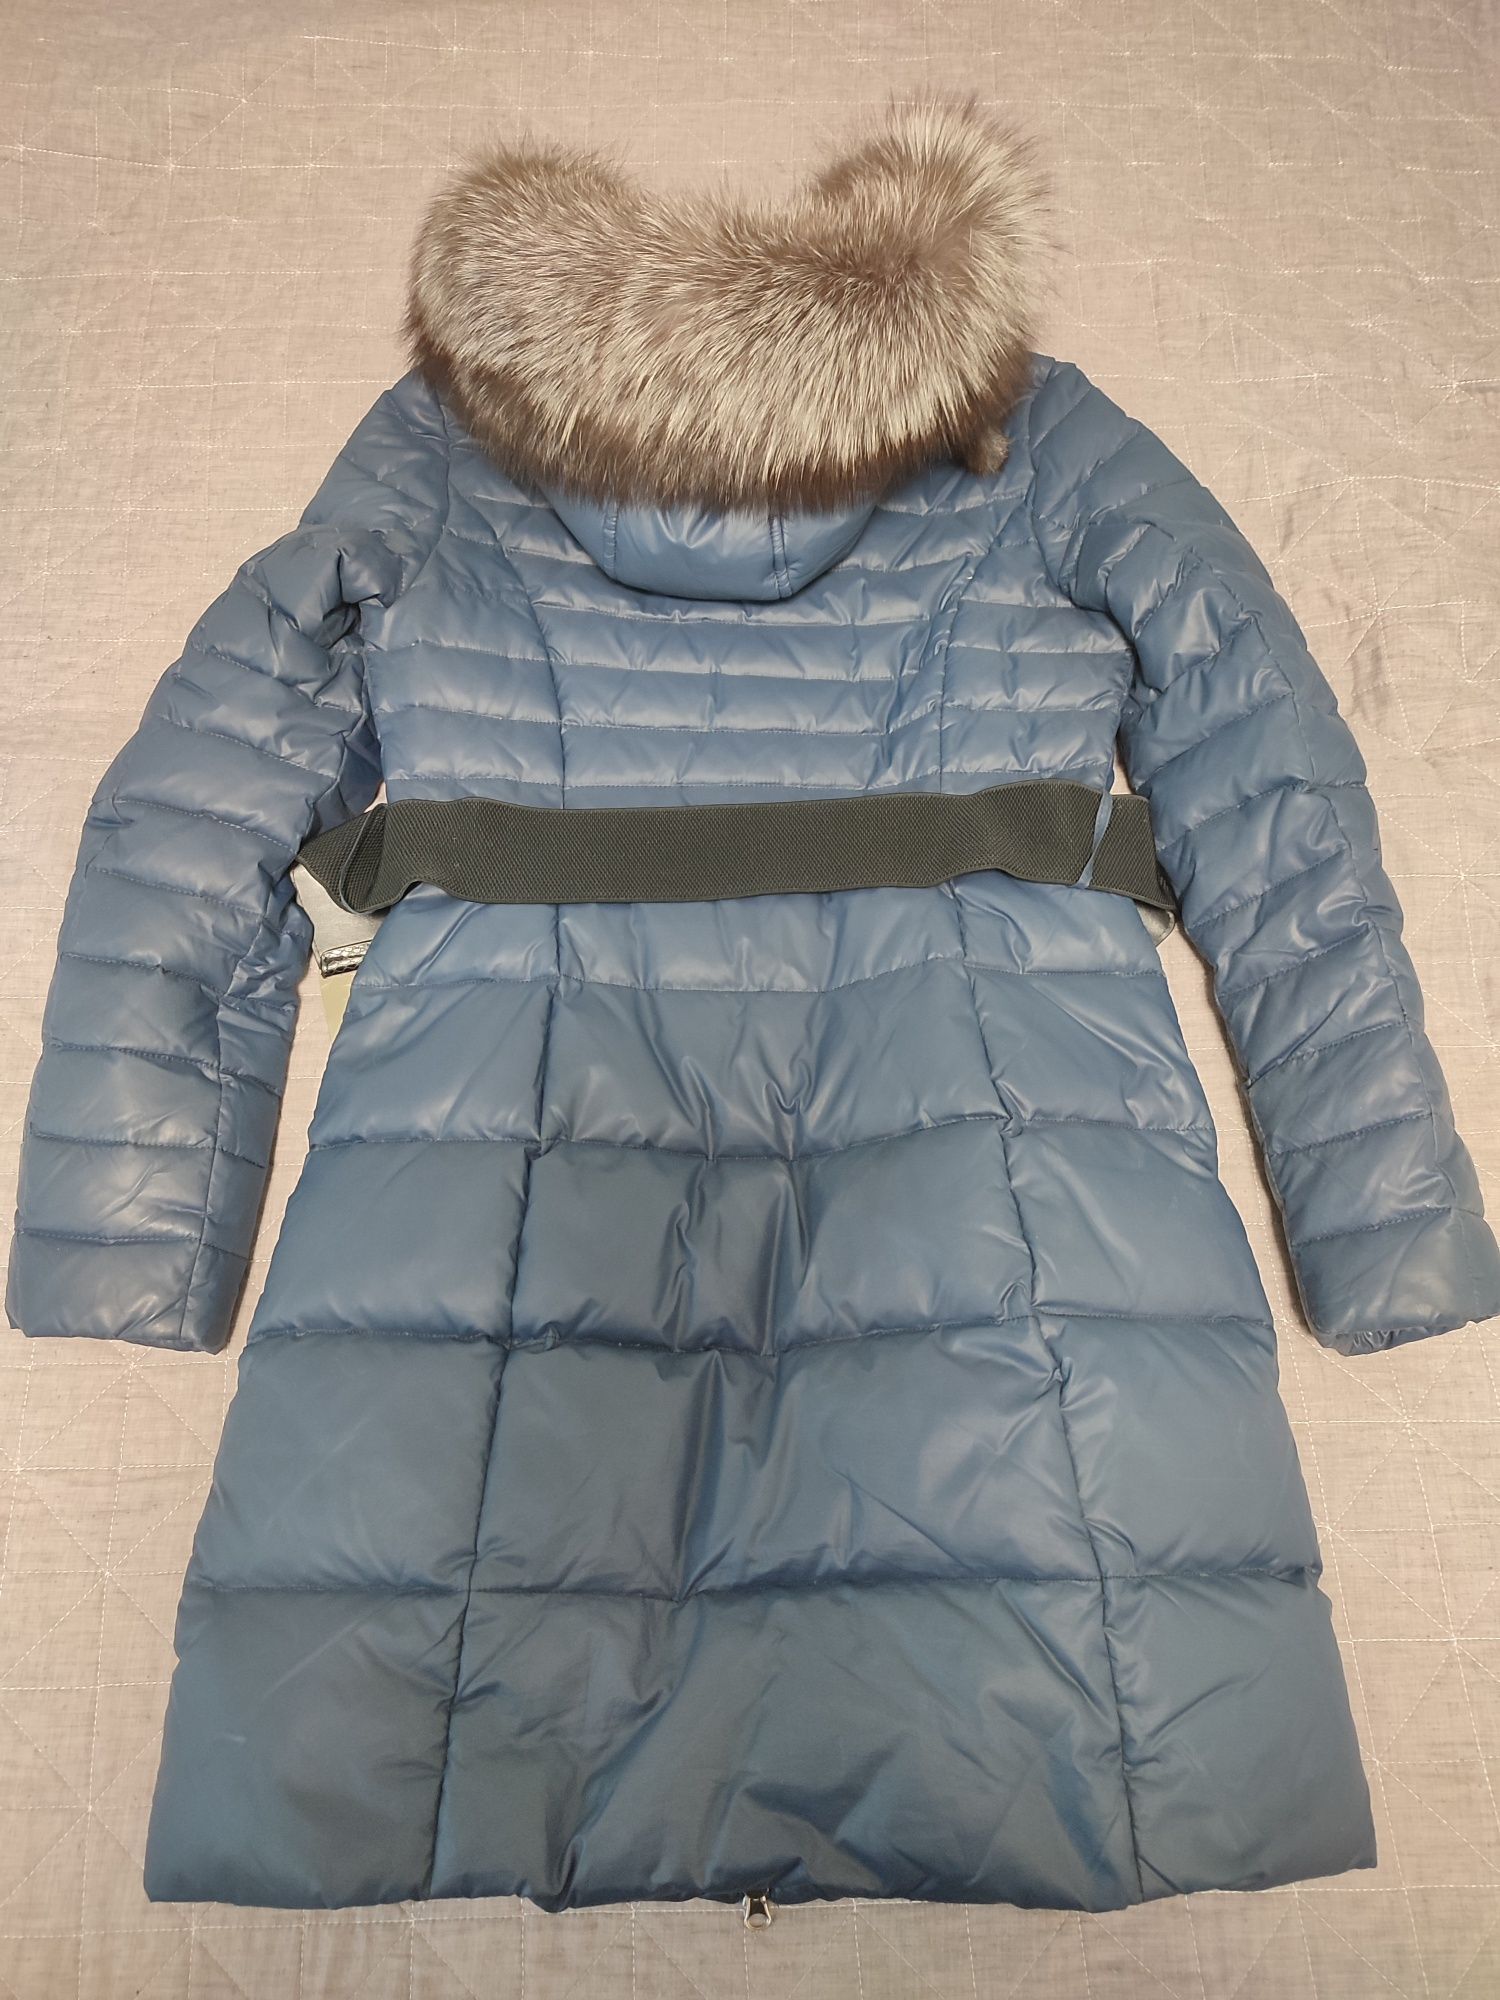 Пуховик пальто женский зимний 44 размер, М